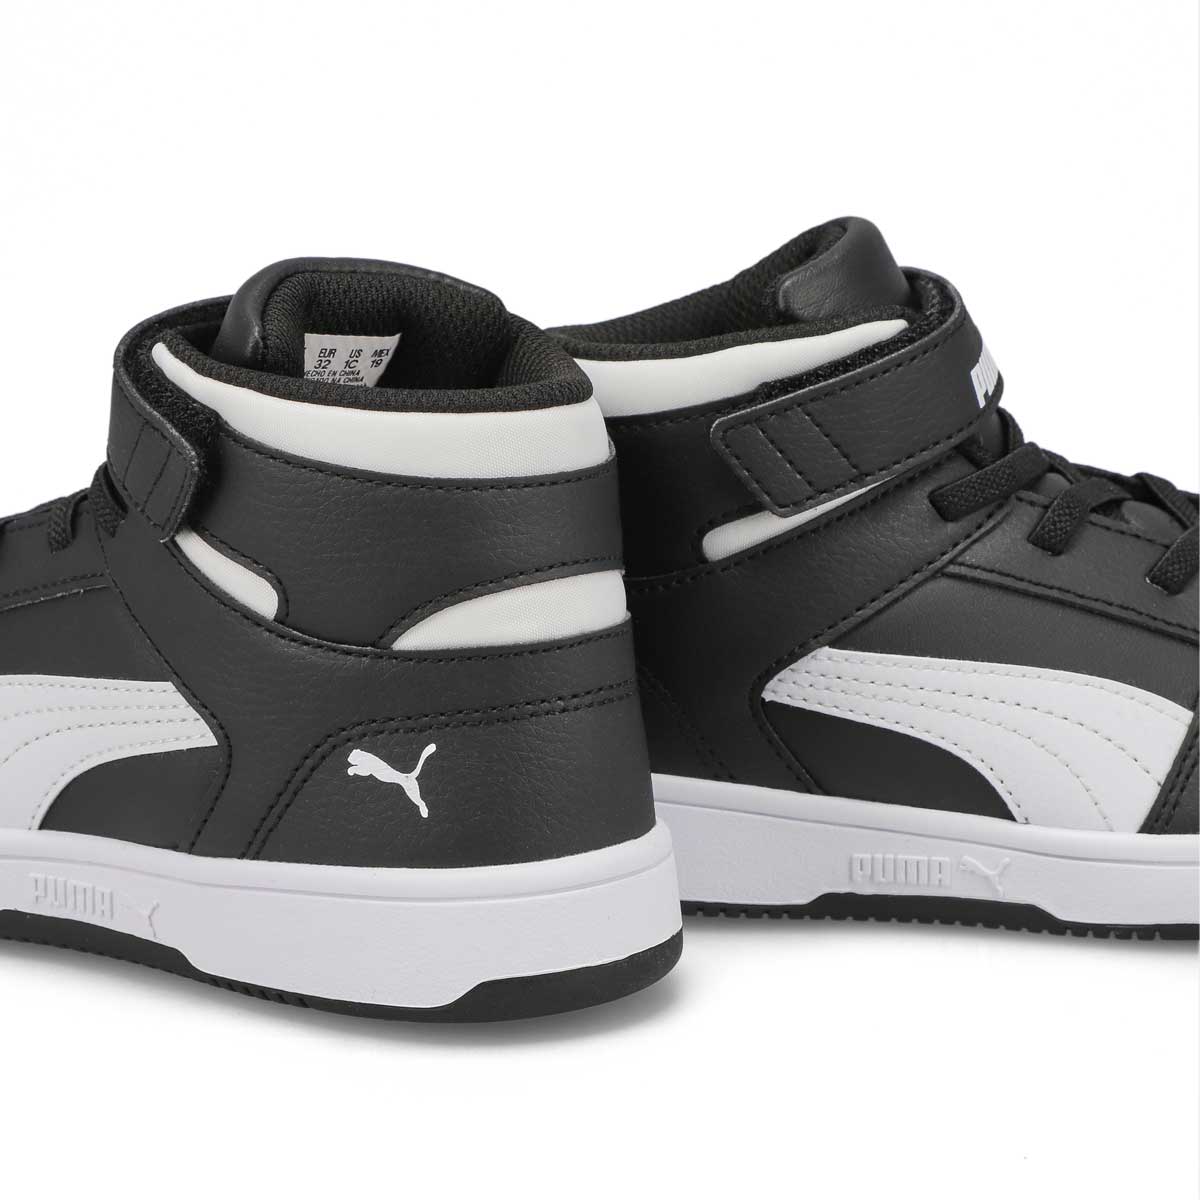 Kids' Rebound Layup SL V PS High Top Sneaker - Black/White